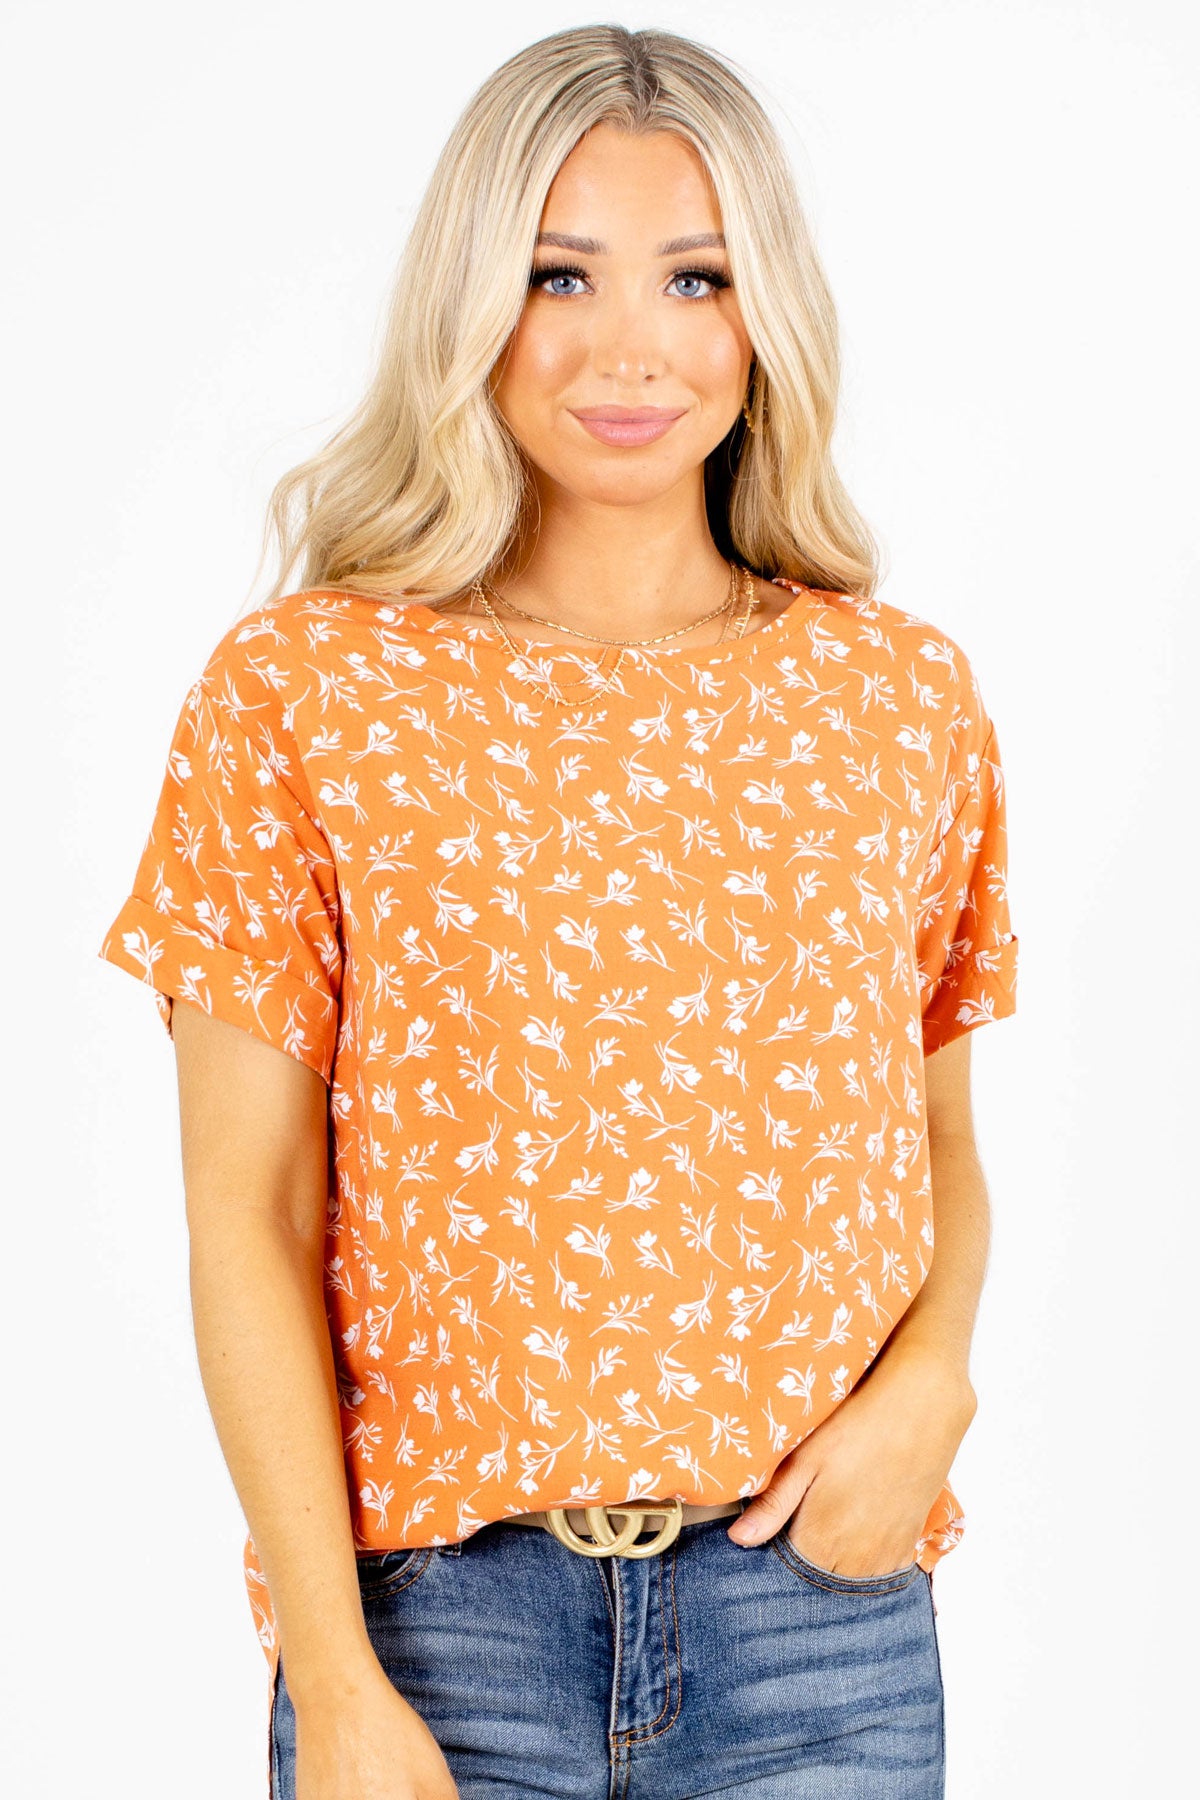 Orange Floral Top For Women